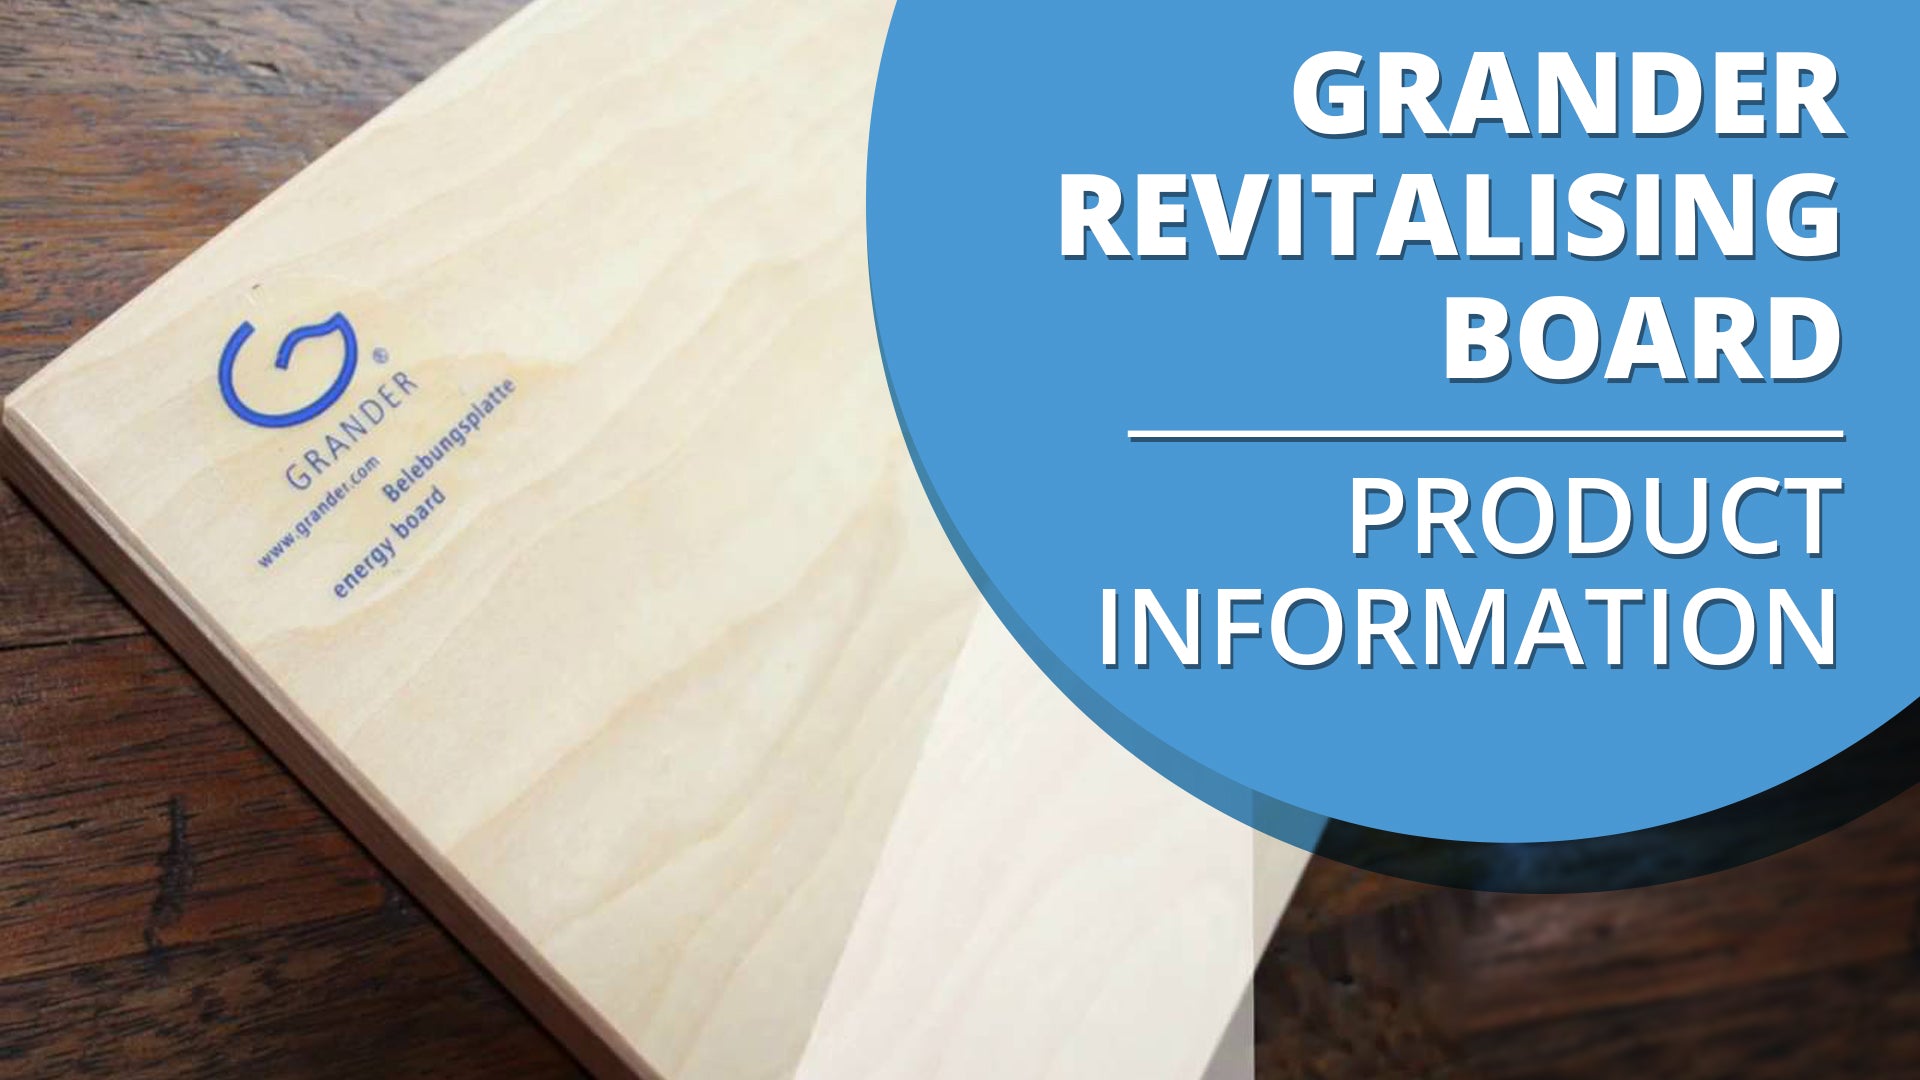 [VIDEO] Grander Revitalising Board - Product Information